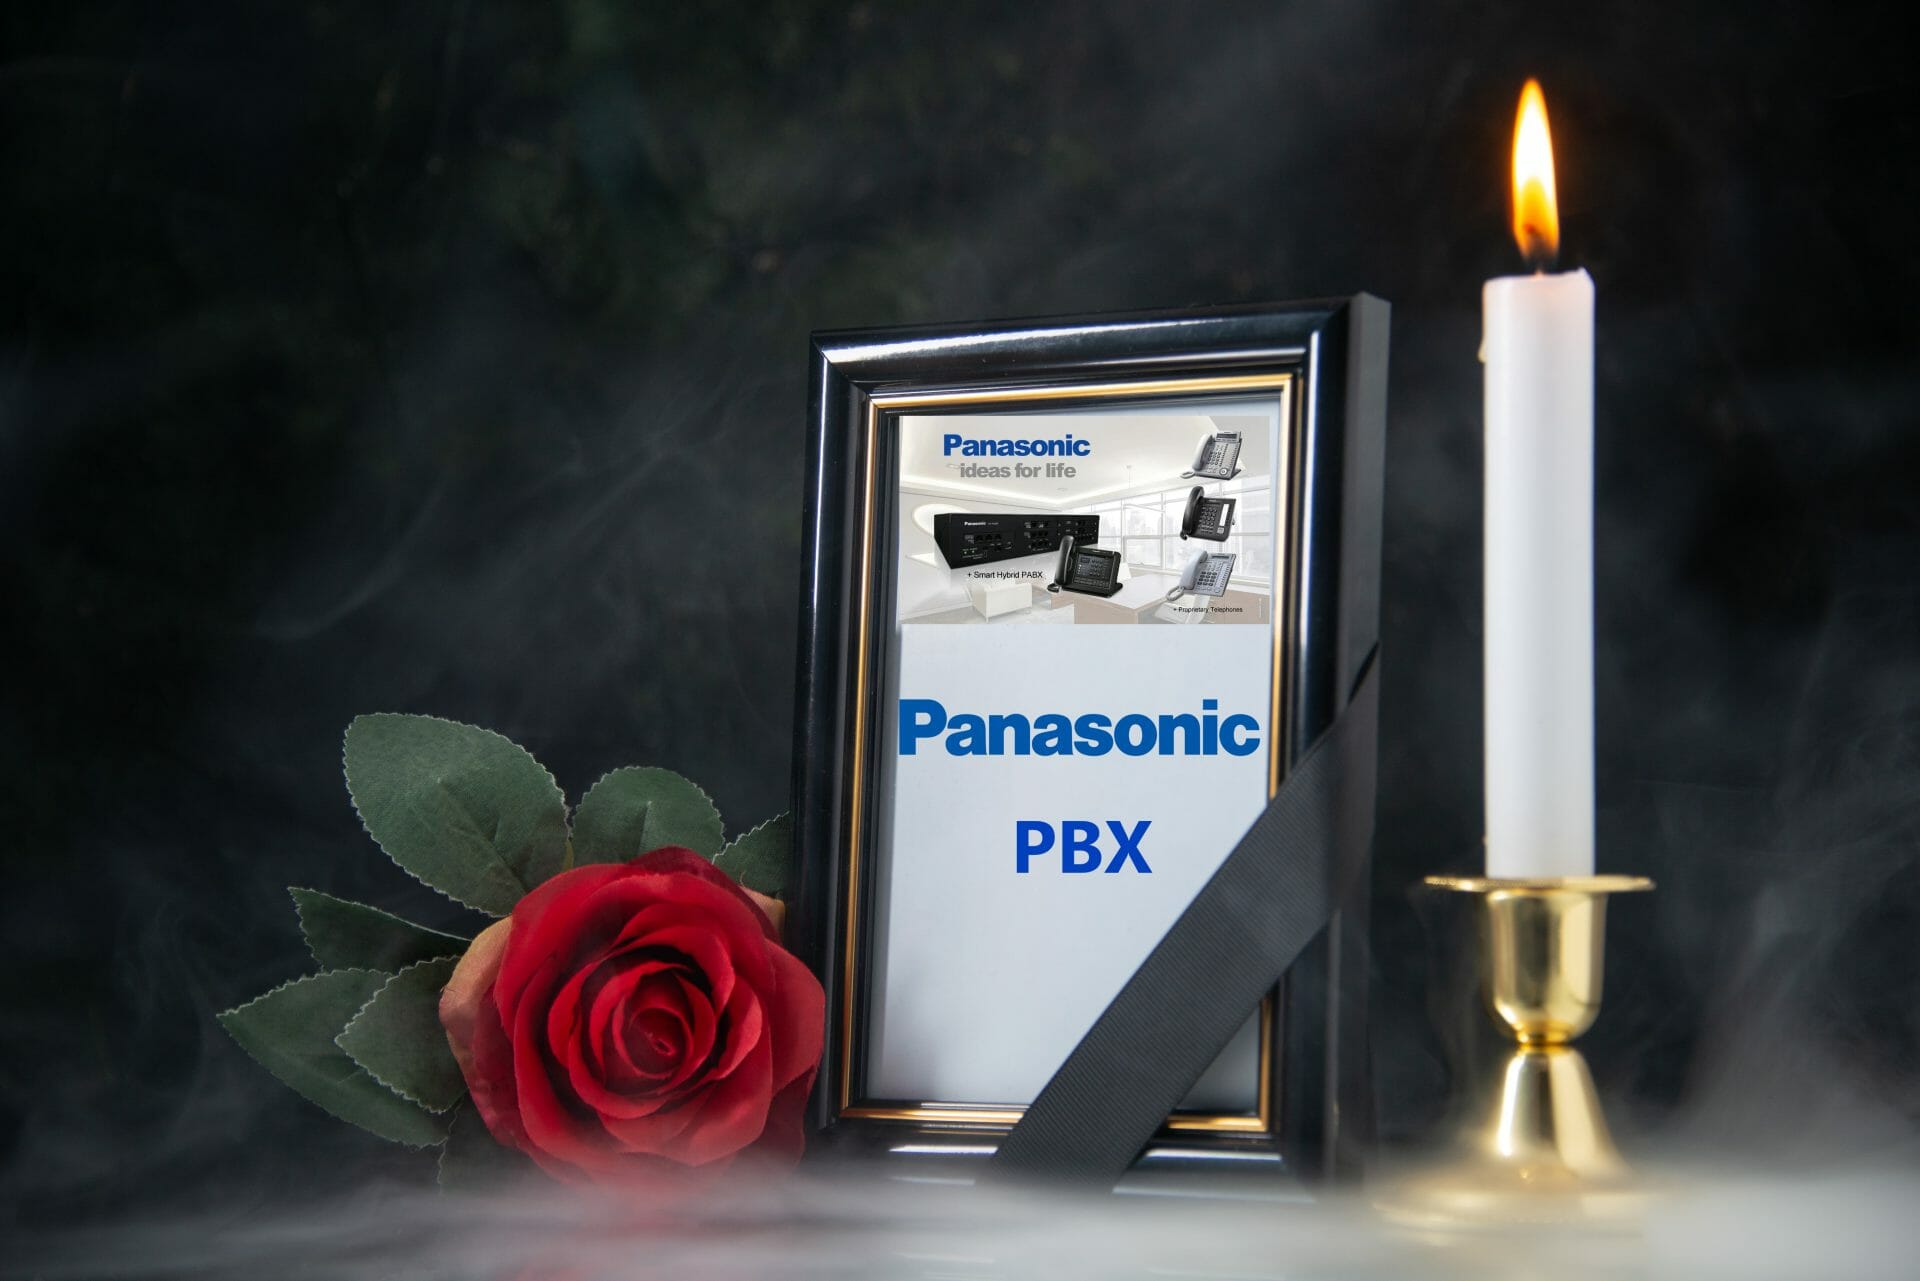 The Death of Panasonic PBX